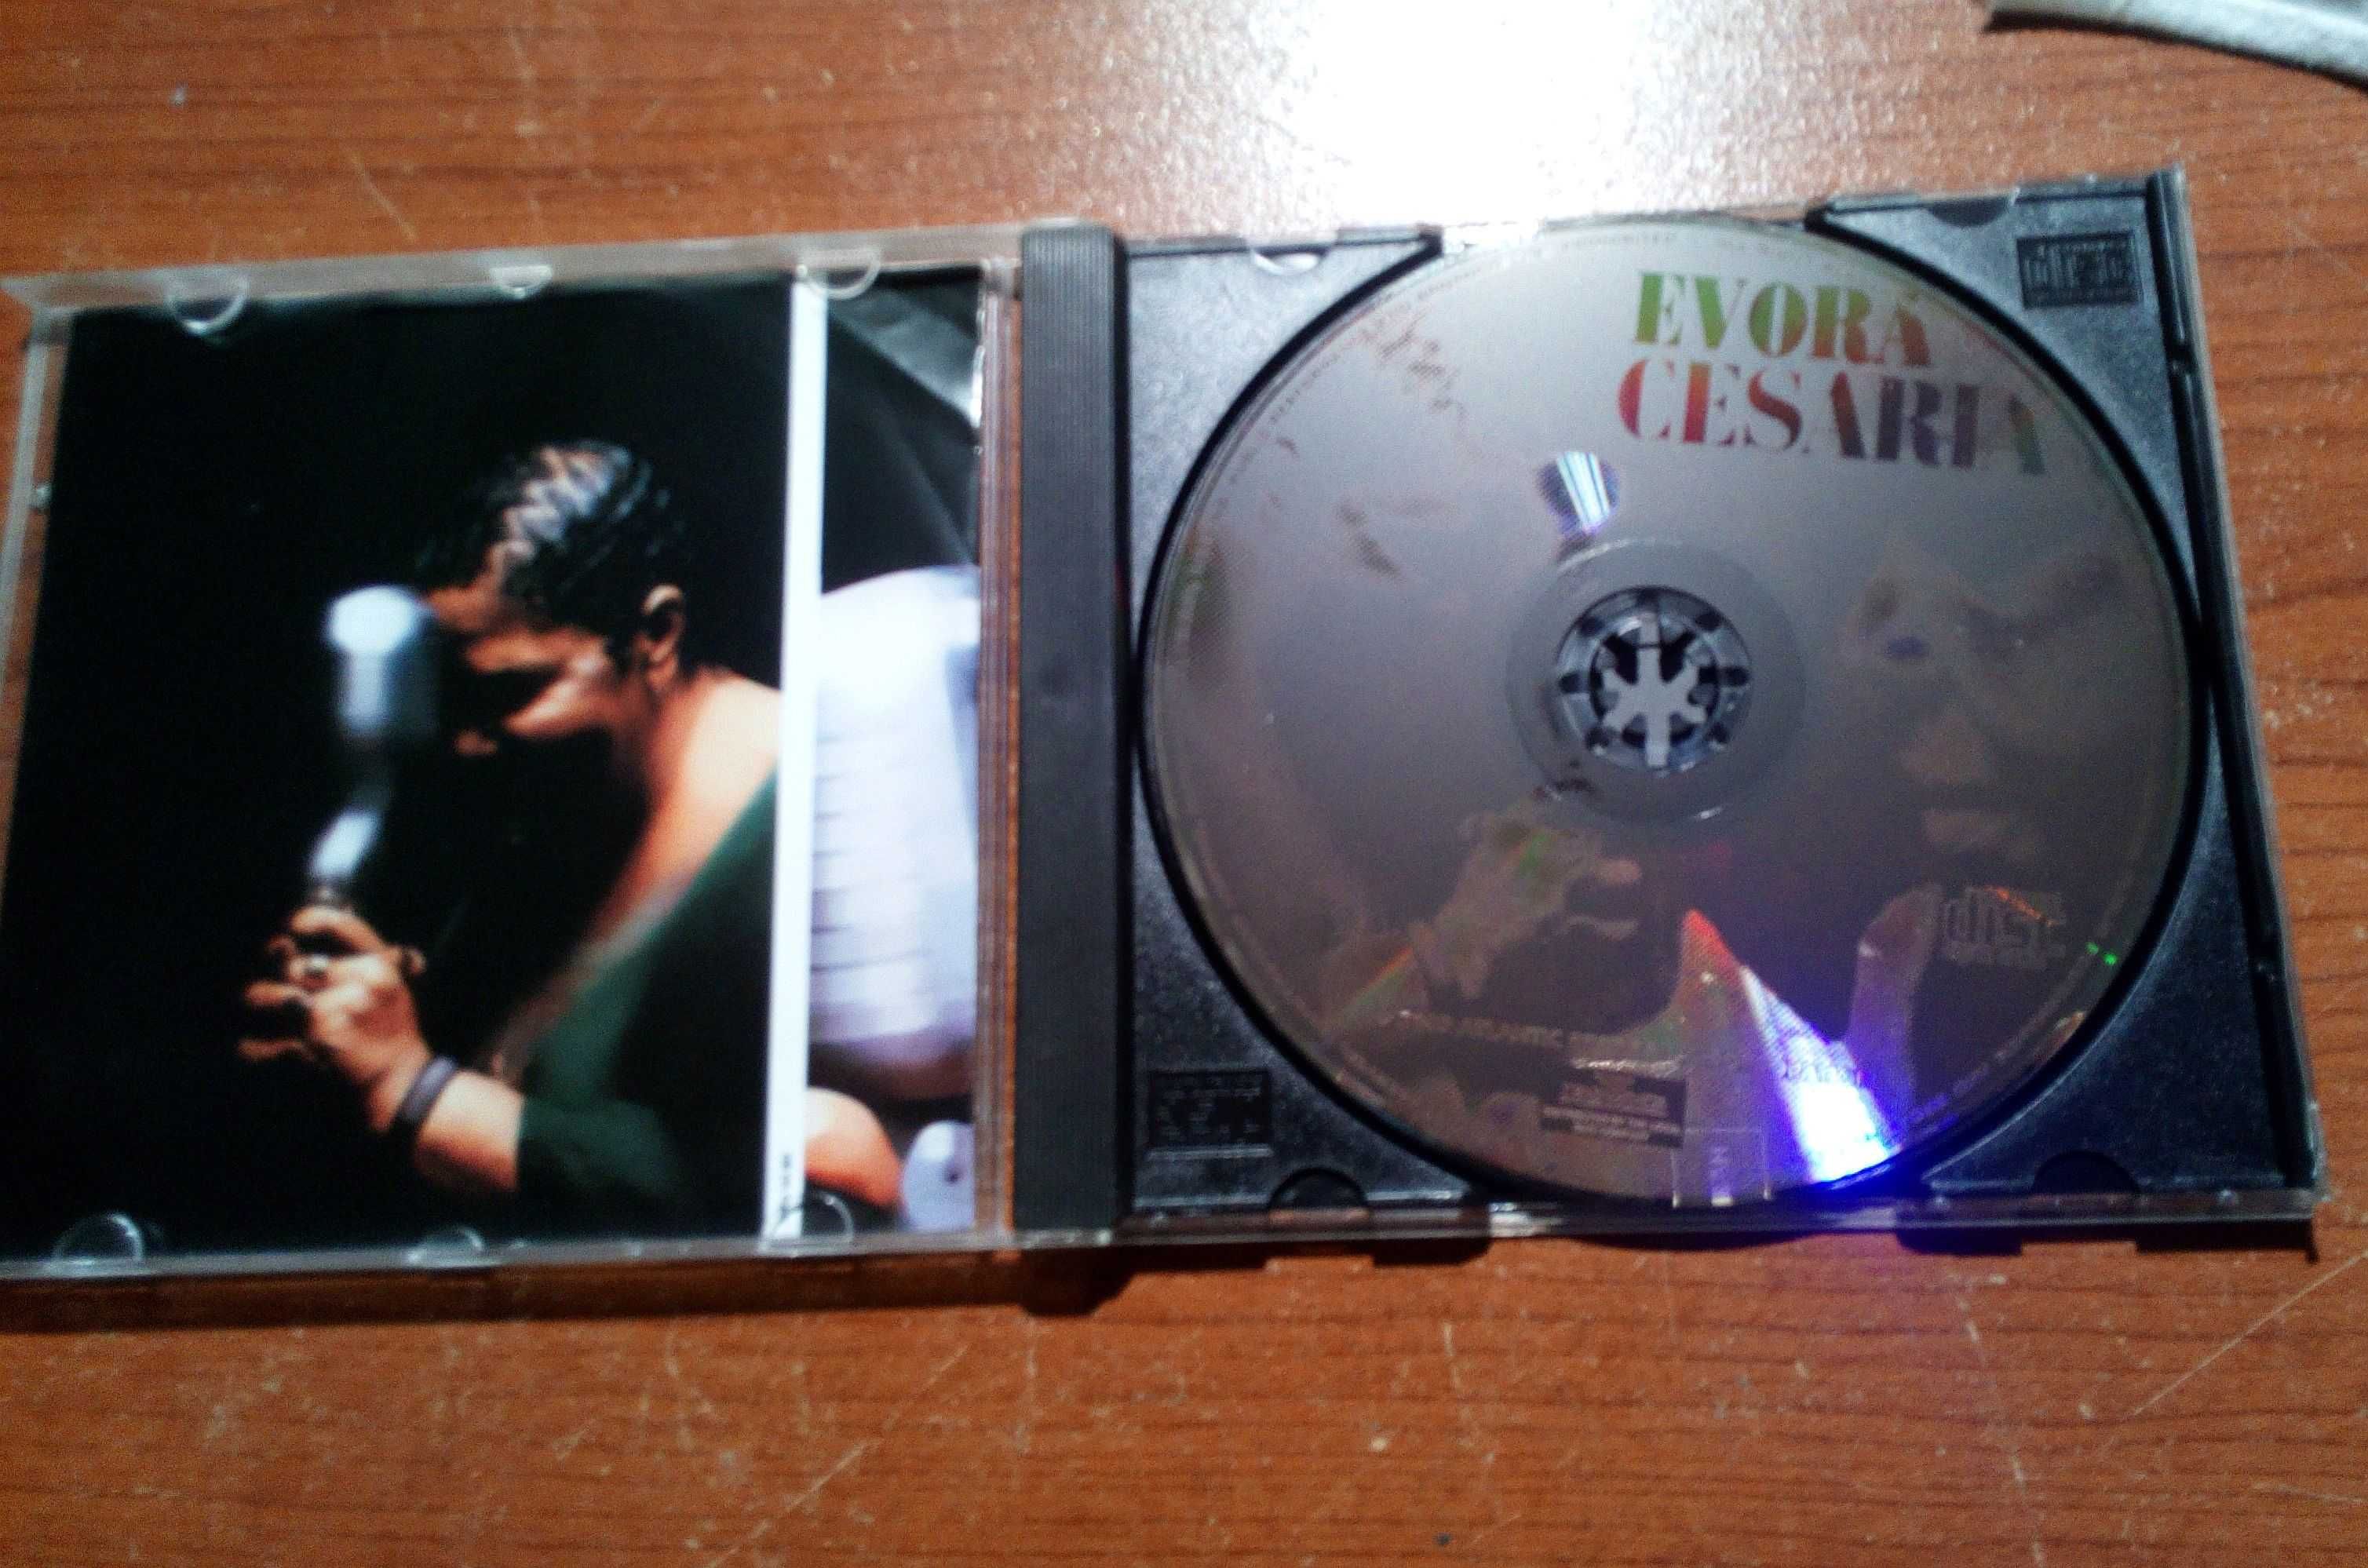 CD Cesaria Evora